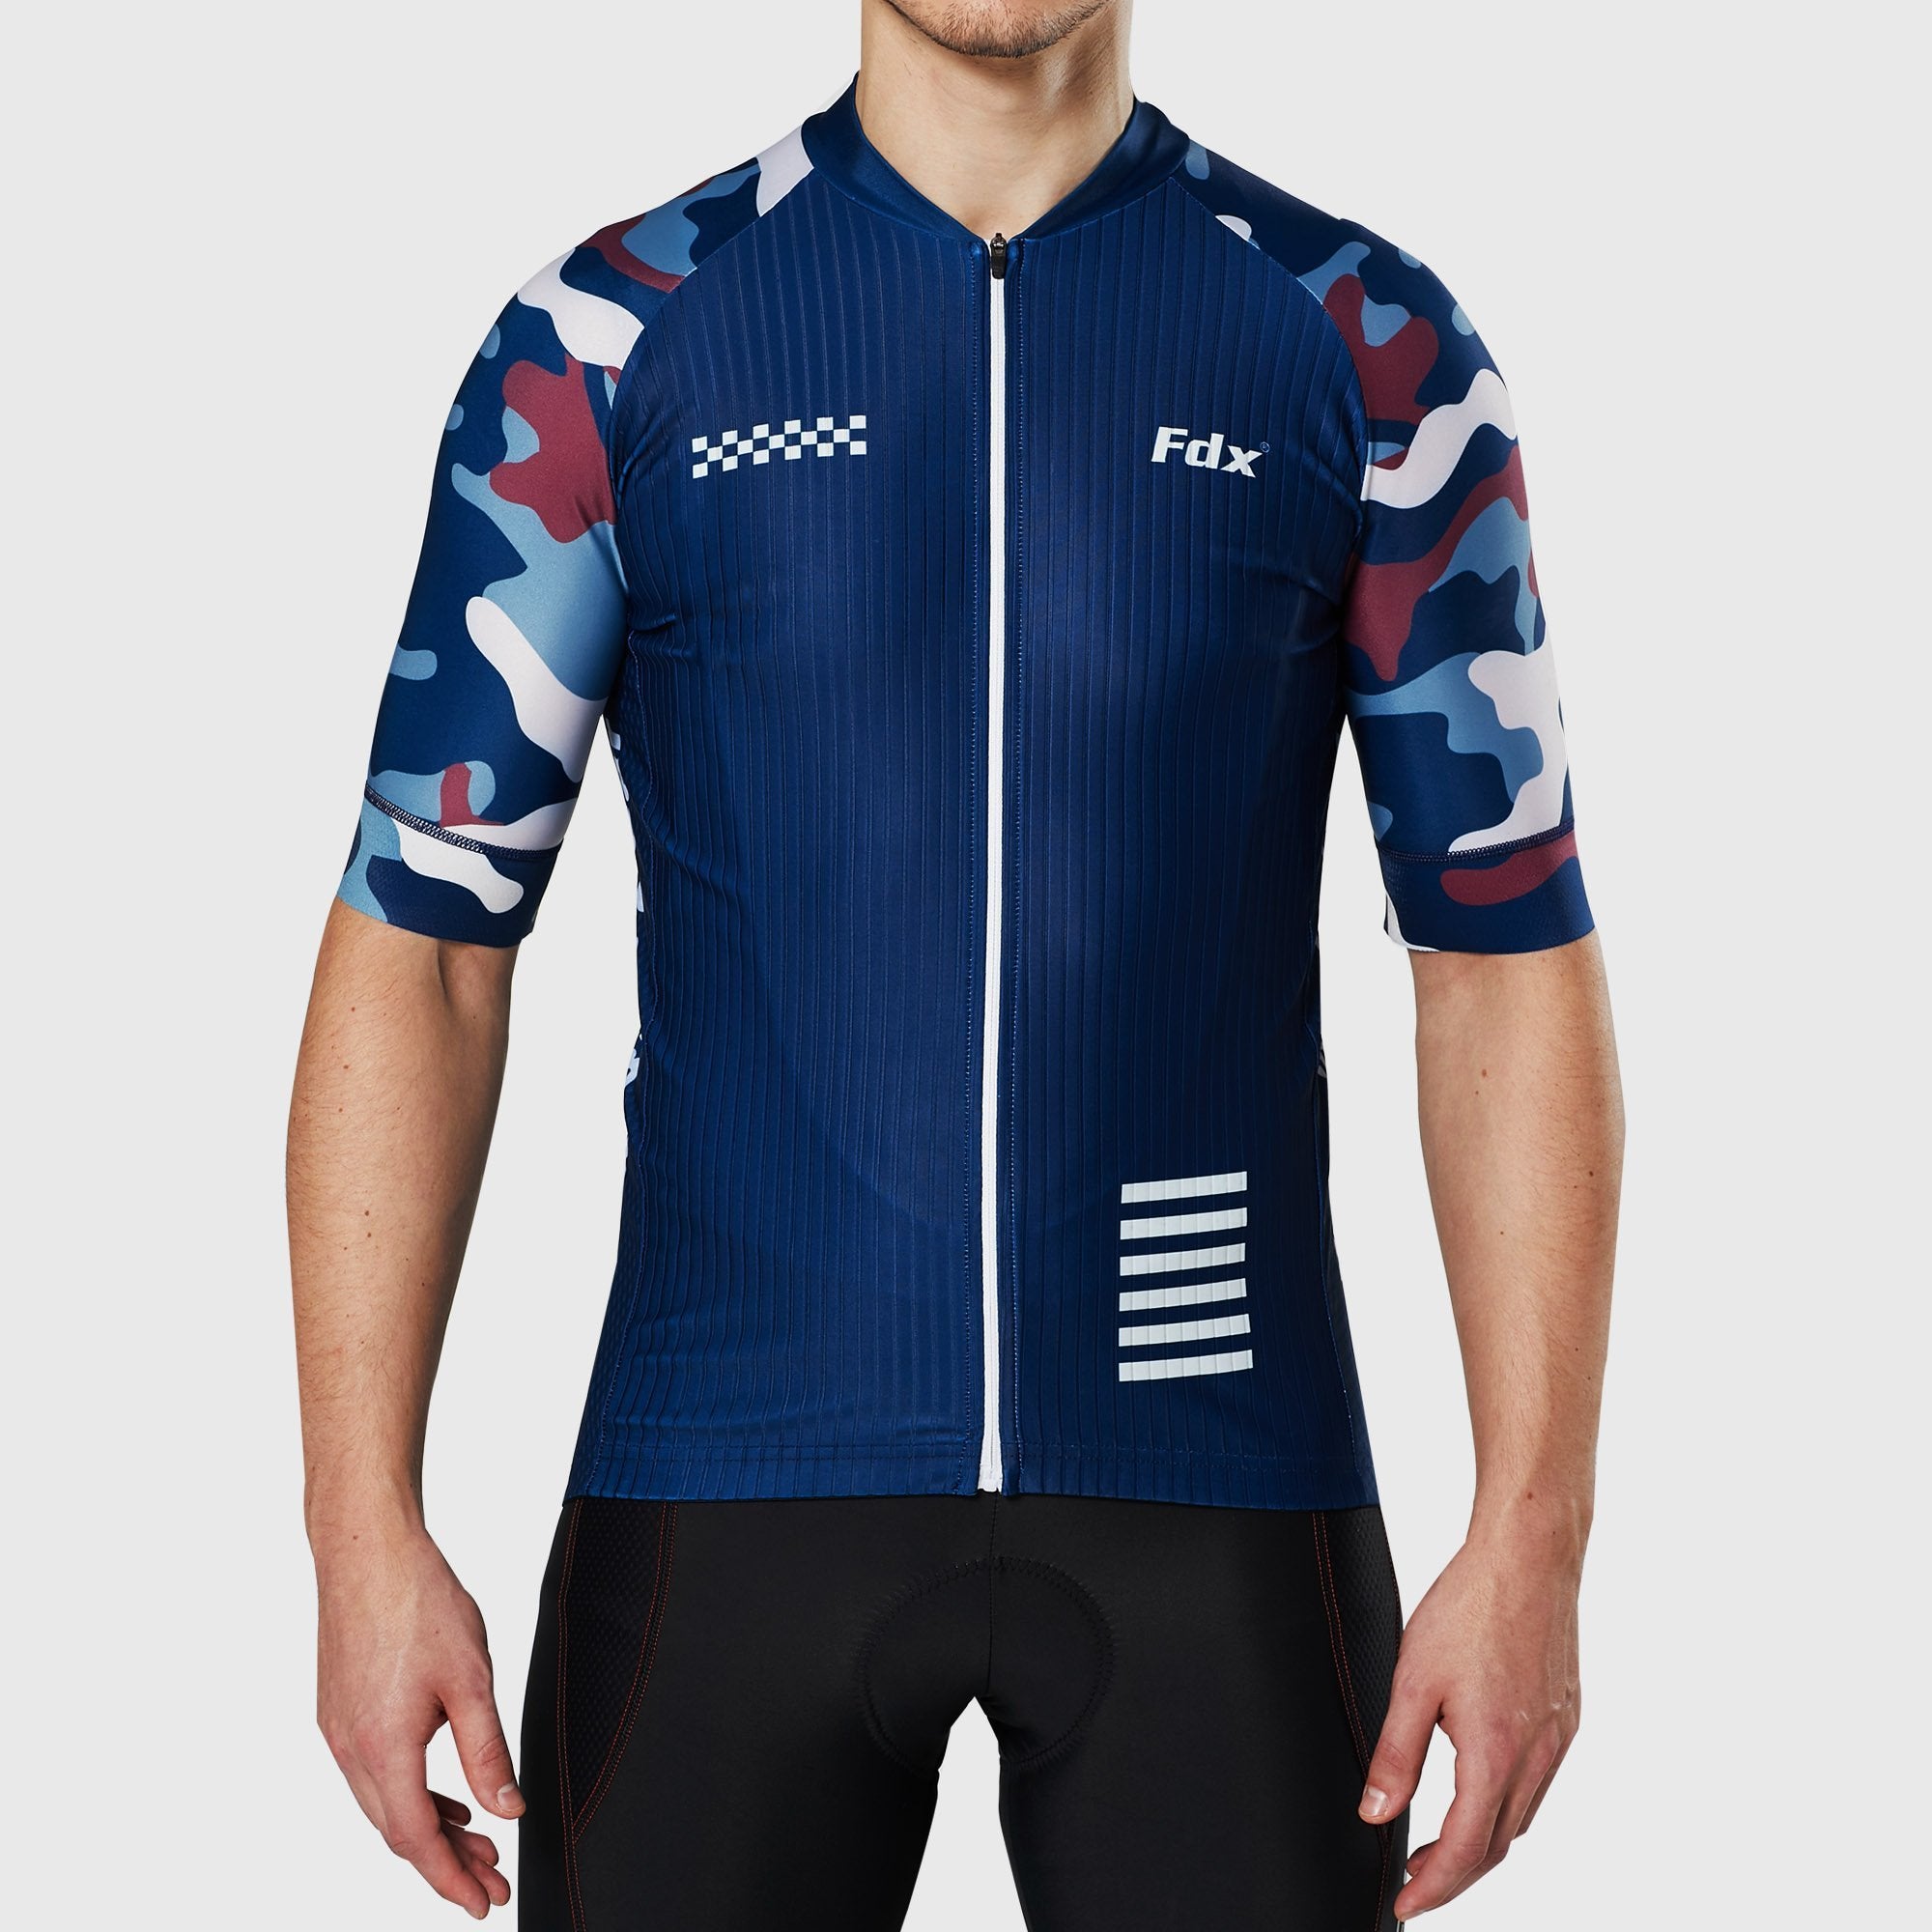 Fdx Men's Blue Camo Short Sleeve Cycling Jersey Best Summer Road Bike Wear Light Weight, Hi-viz Reflectors & Pockets - Camouflage